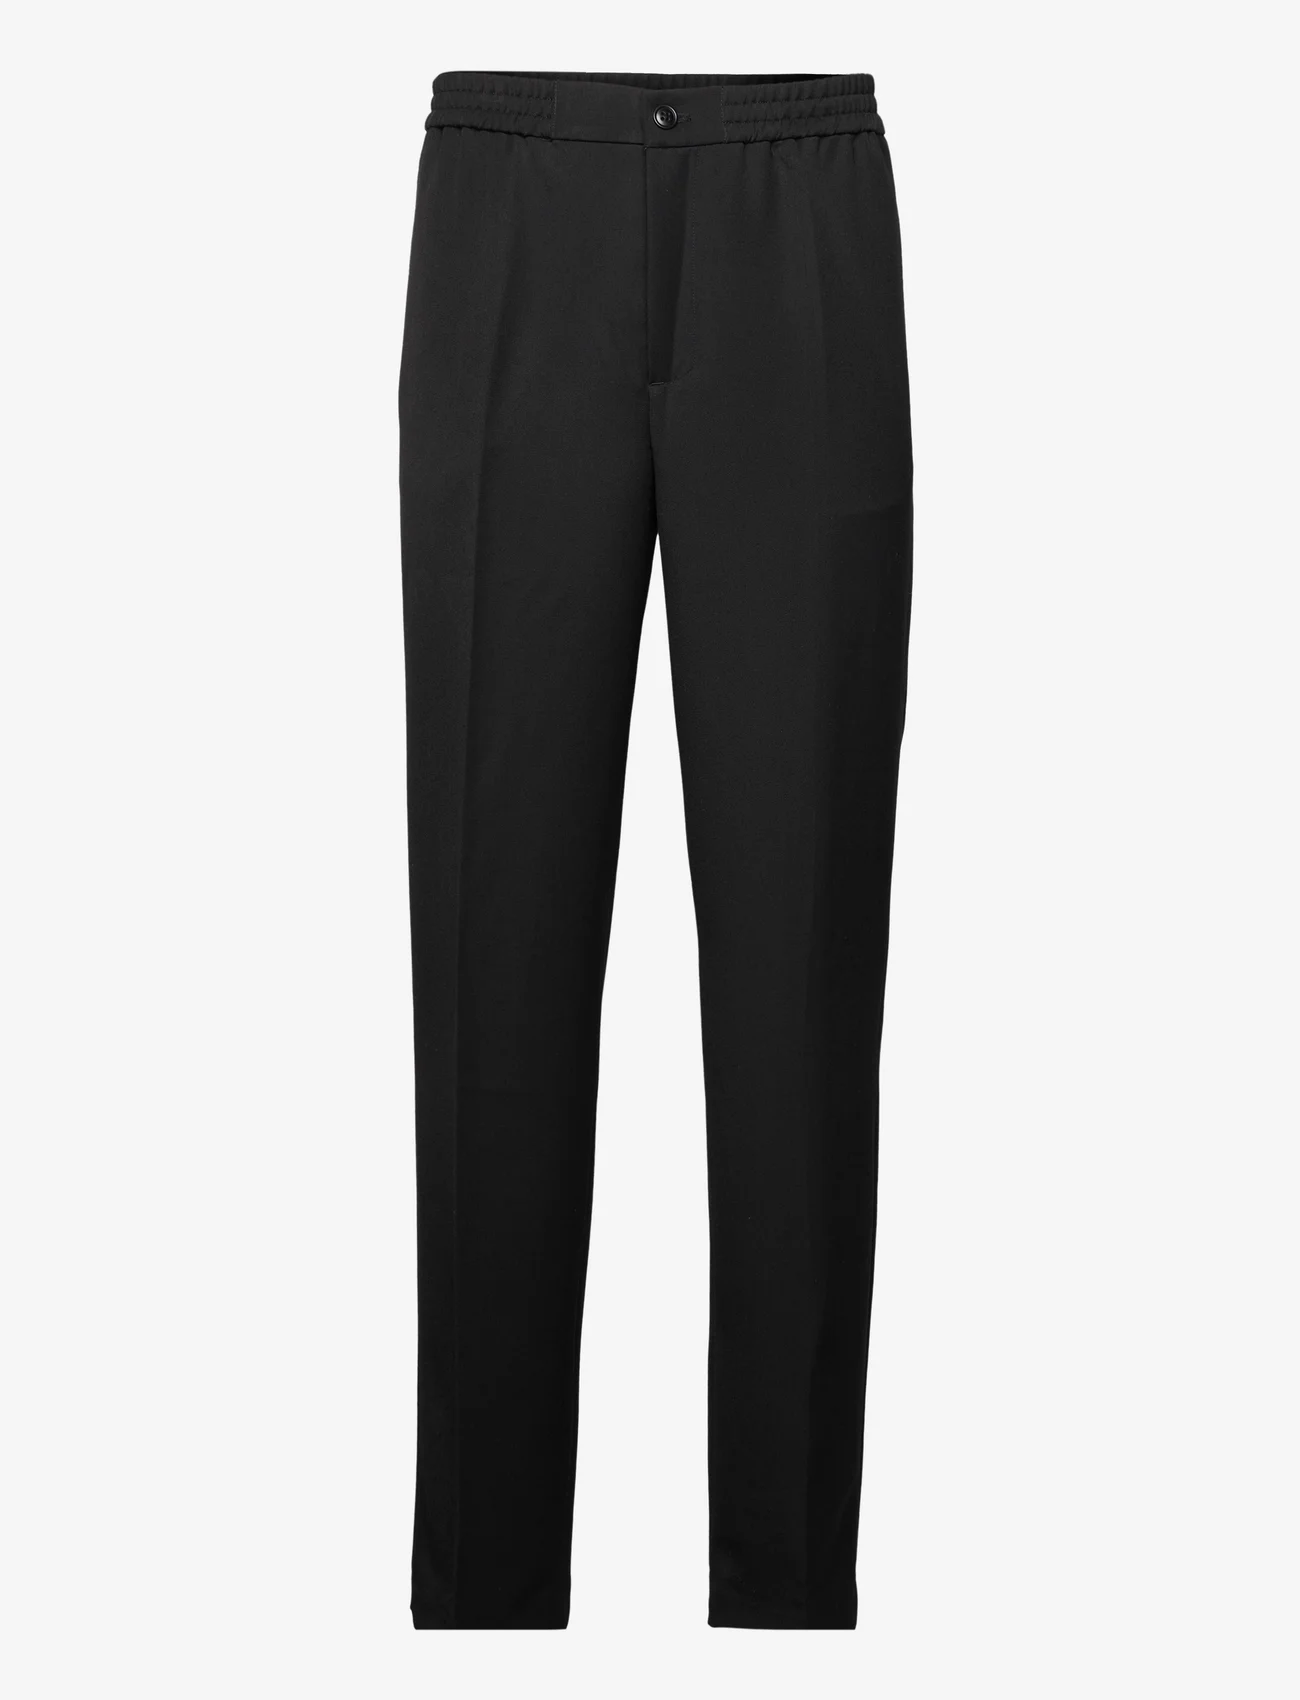 Daily Paper - ransel pants - suit trousers - black - 0